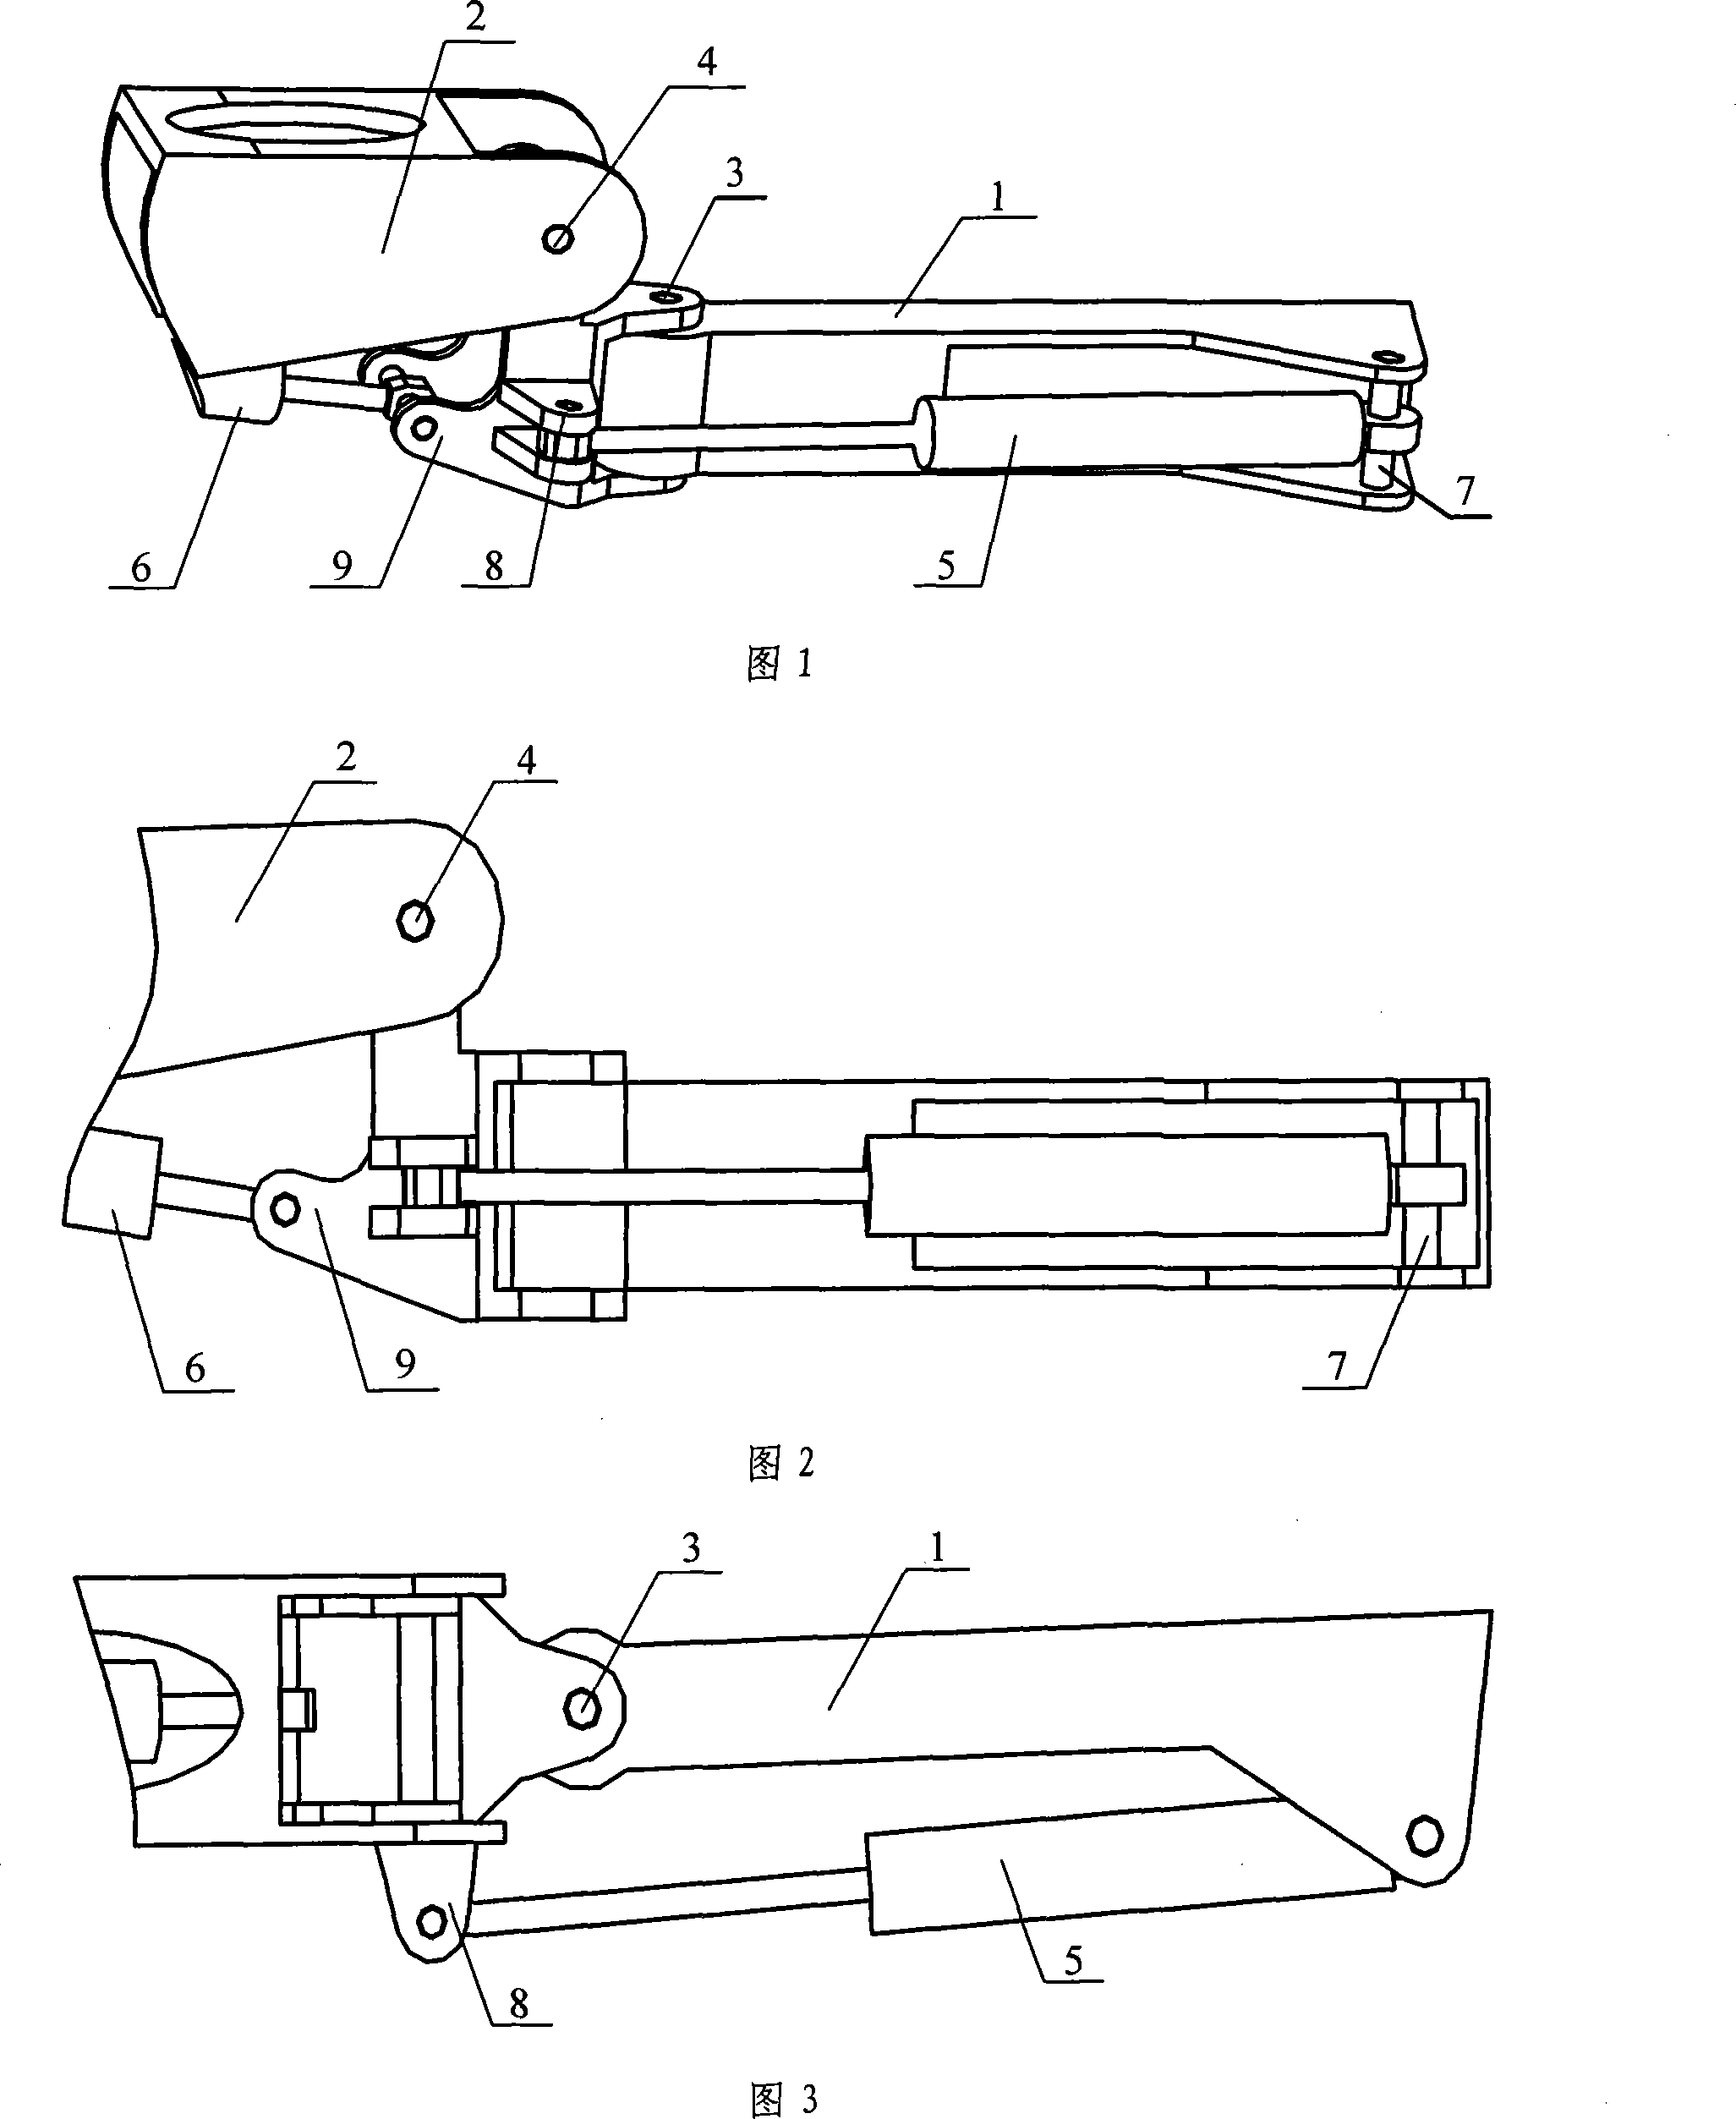 Submarine manipulator shoulder joint